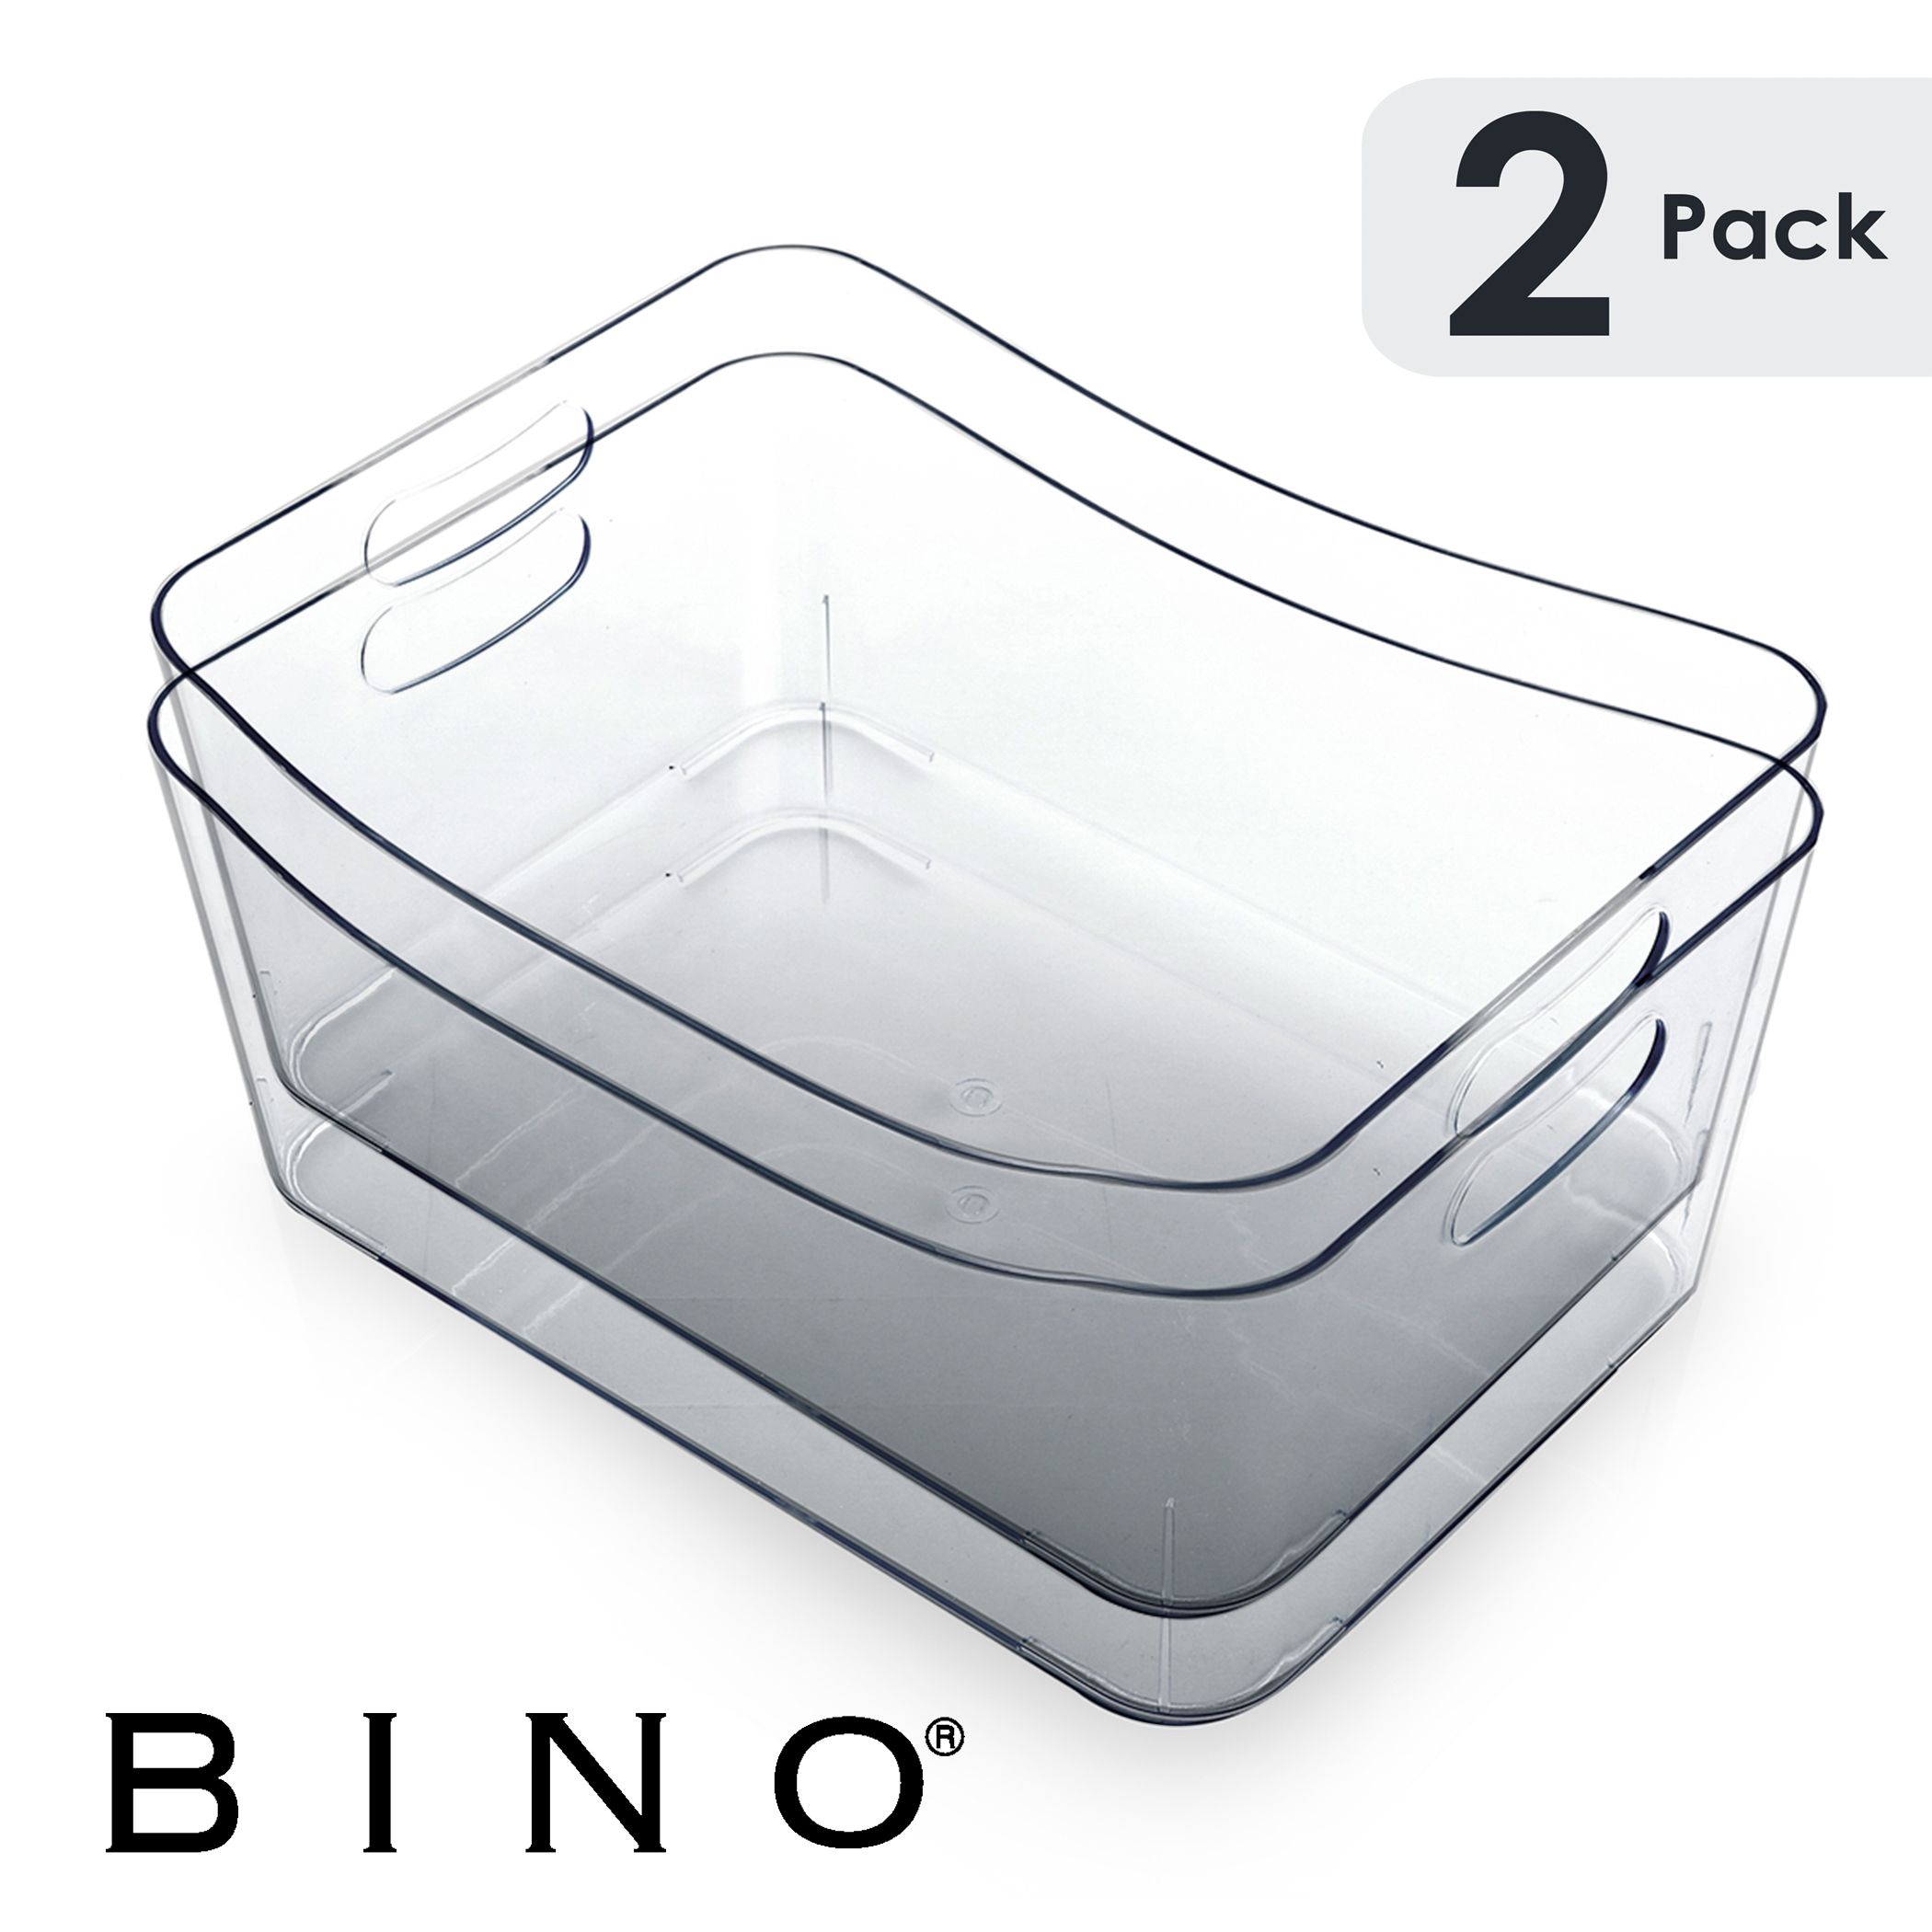 BINO Plastic Organizer Storage Bins with Handles, 2 Pack, Clear - Organization for Home, Office, ... | Walmart (US)